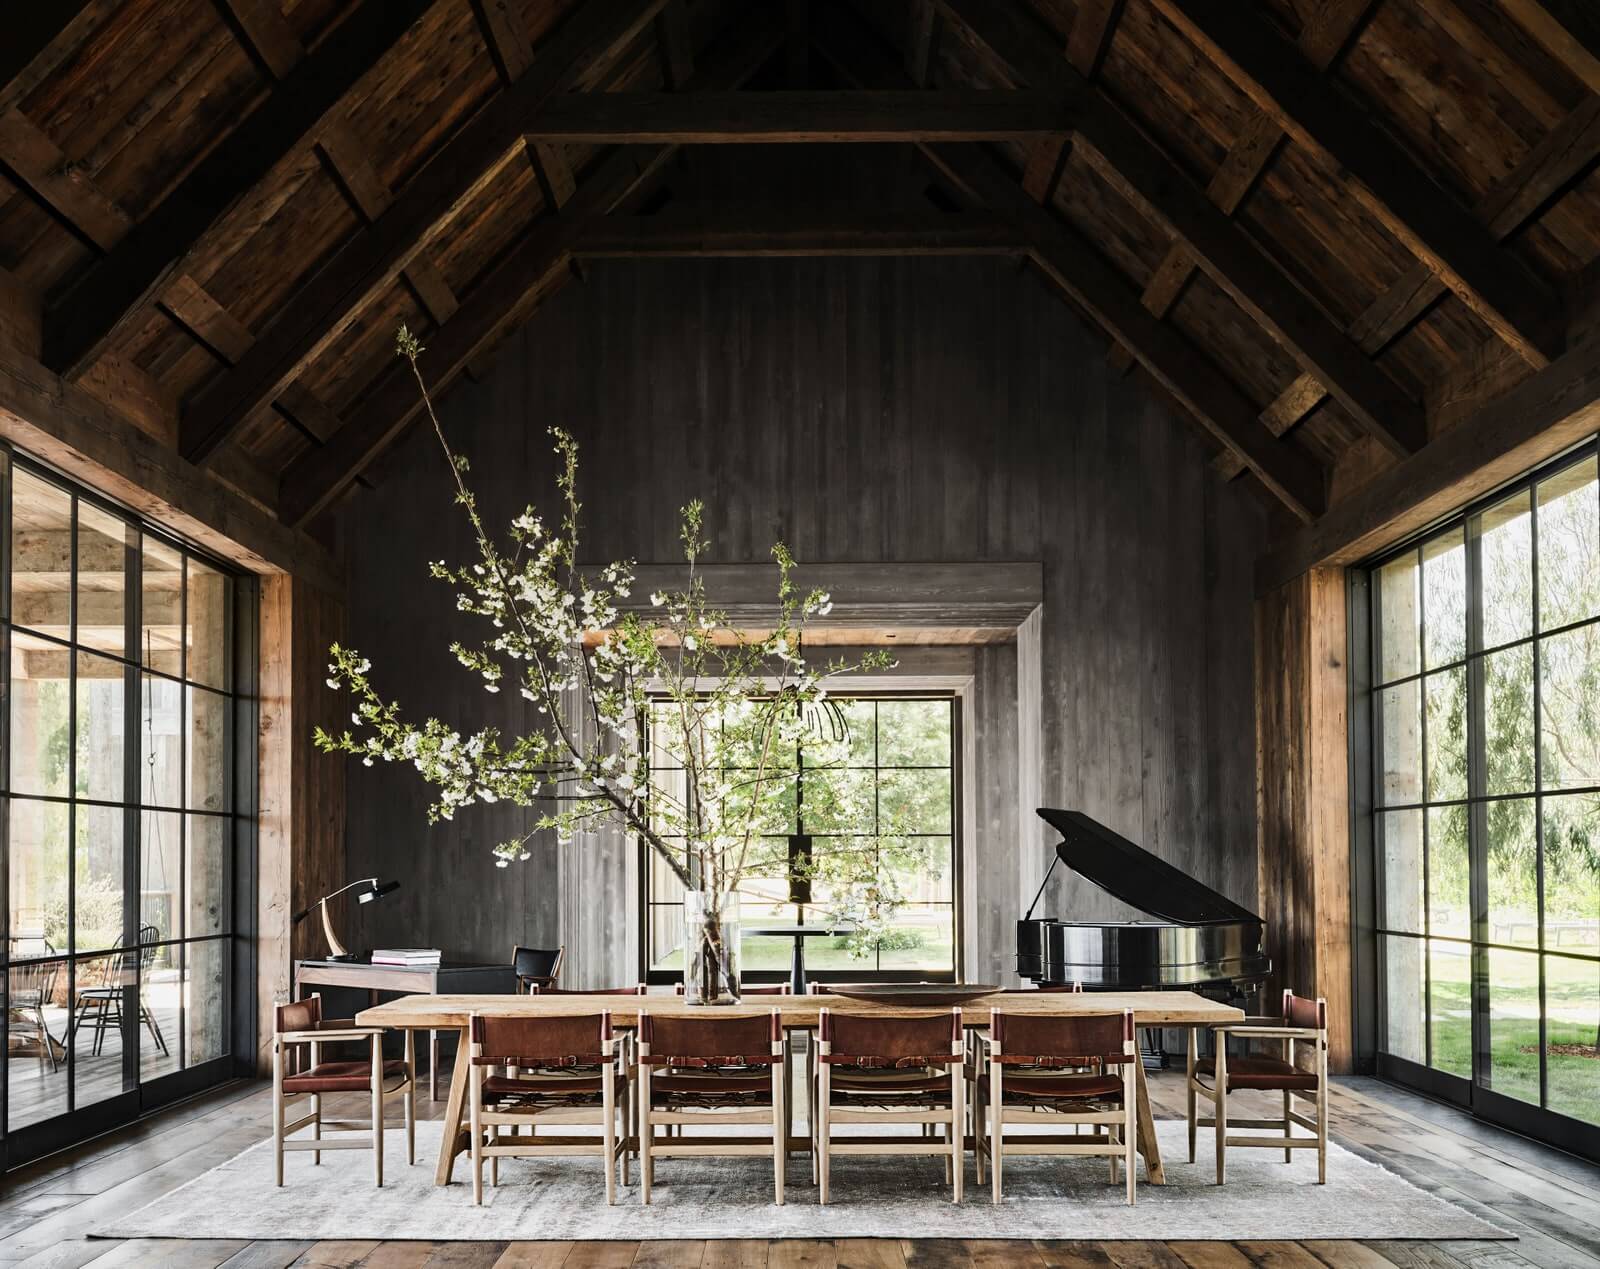 Modern Farmhouse Rustic Interior Meets Contemporary Style